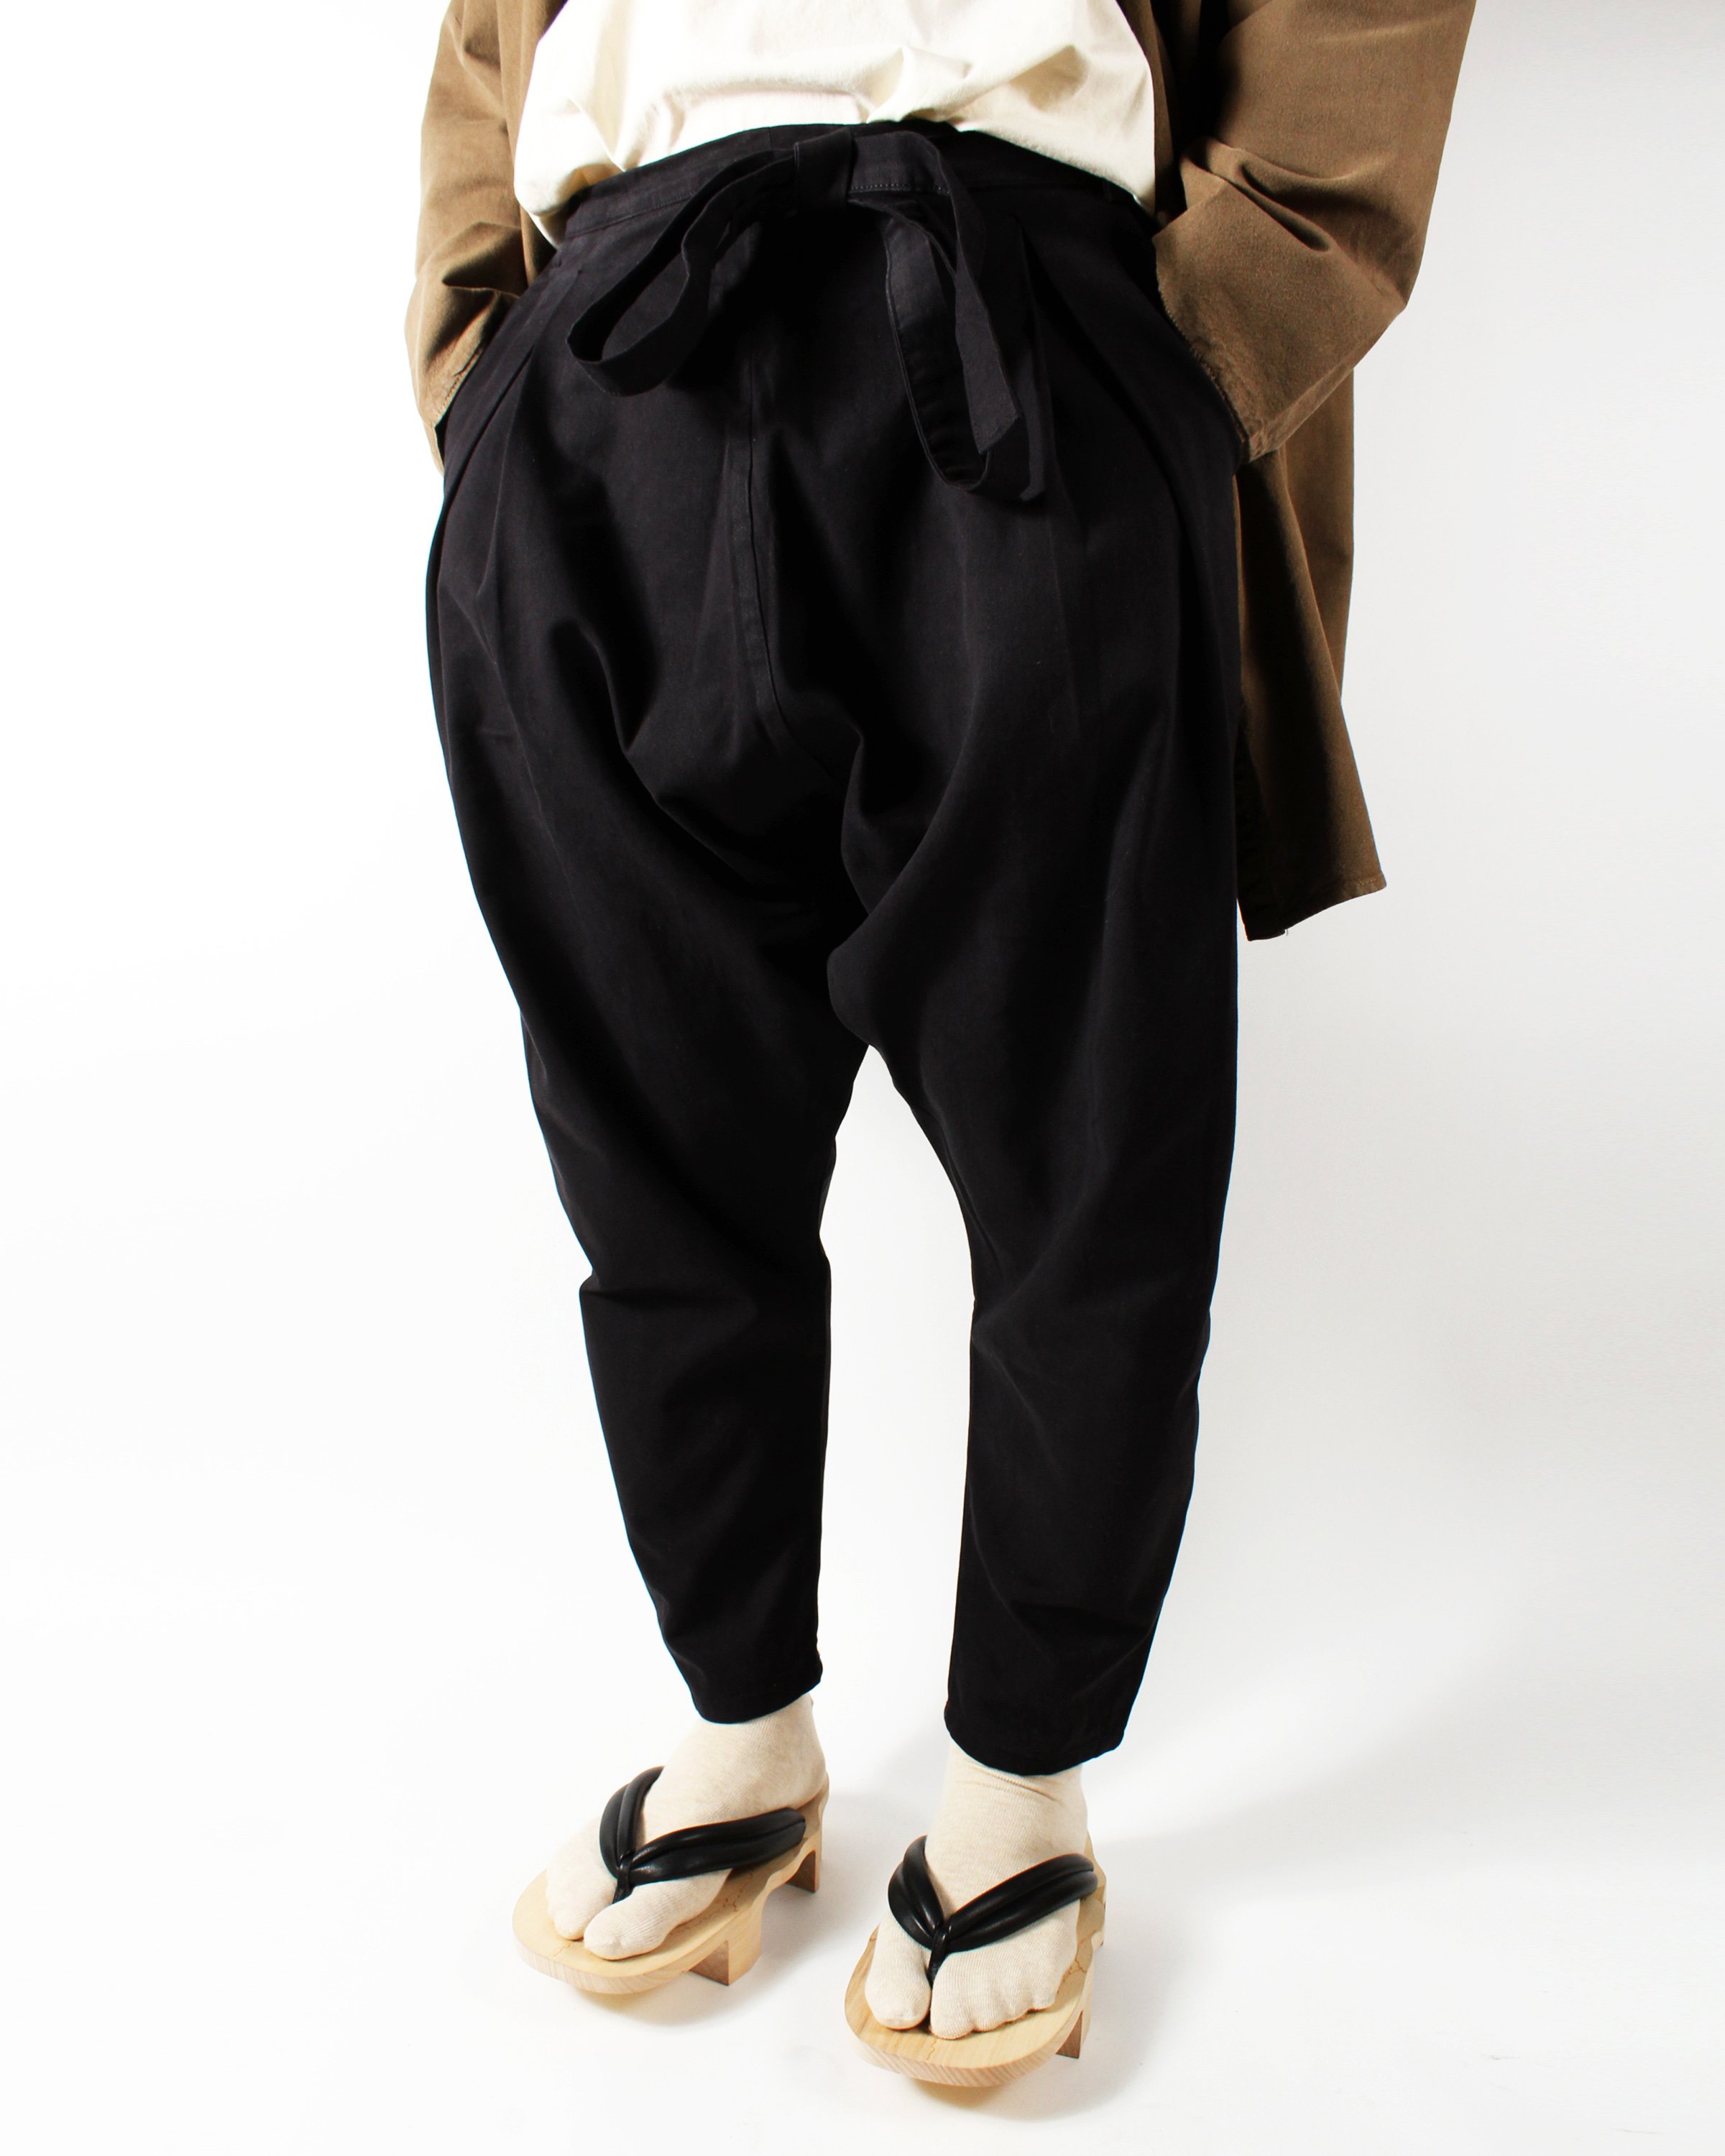 KUNIYOSHI GETA - BLACK | Prospective Flow | Japanese Fashion for Men ...